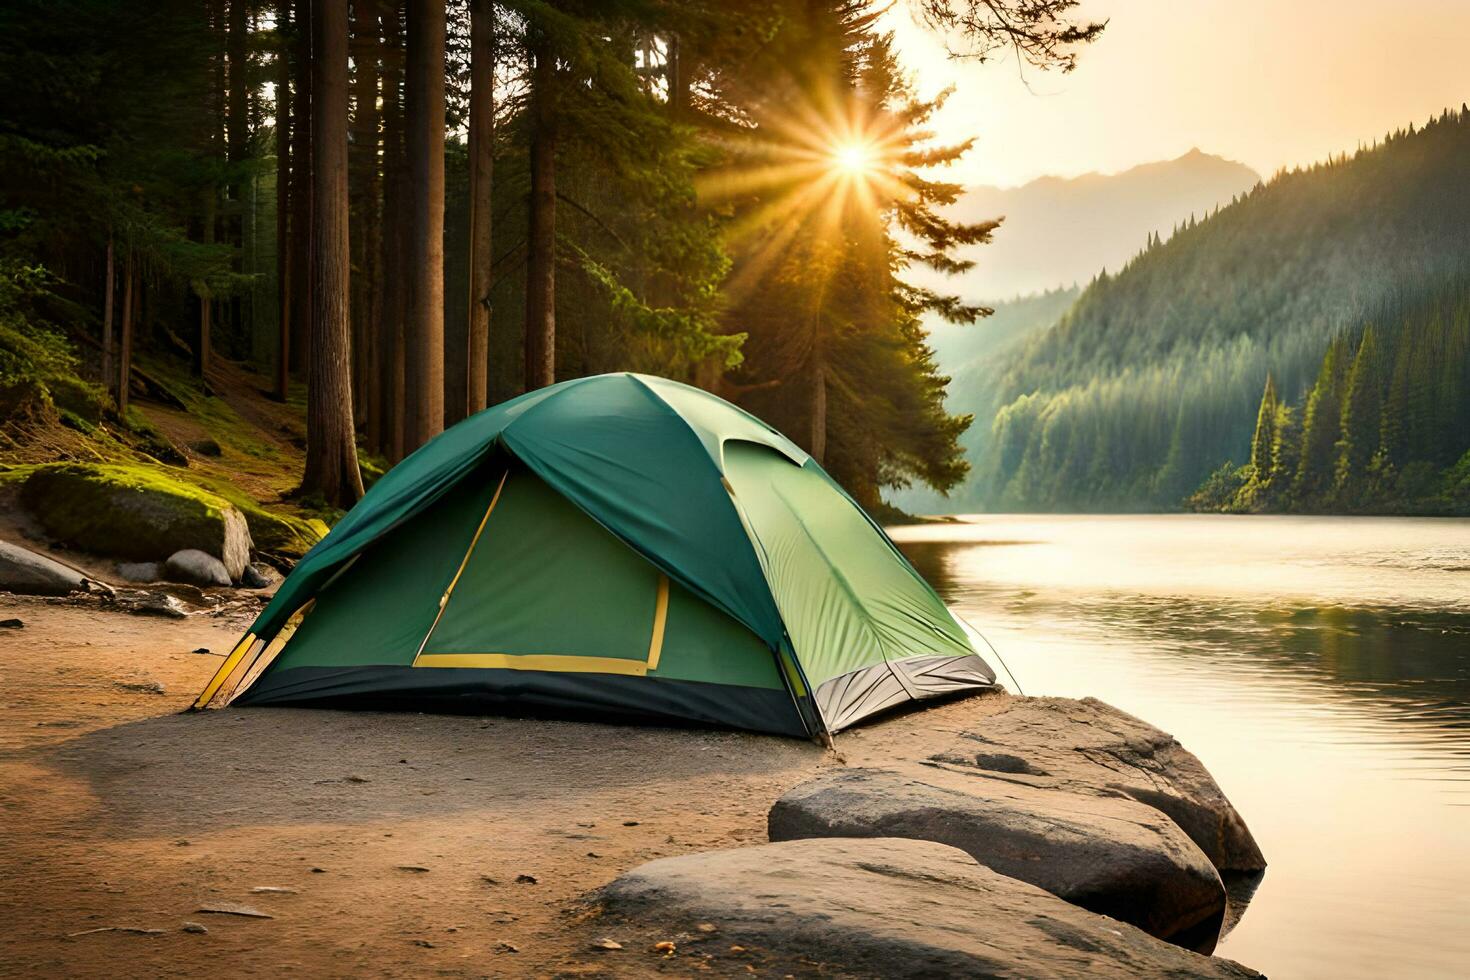 camping grönt tält i skogen nära sjön foto